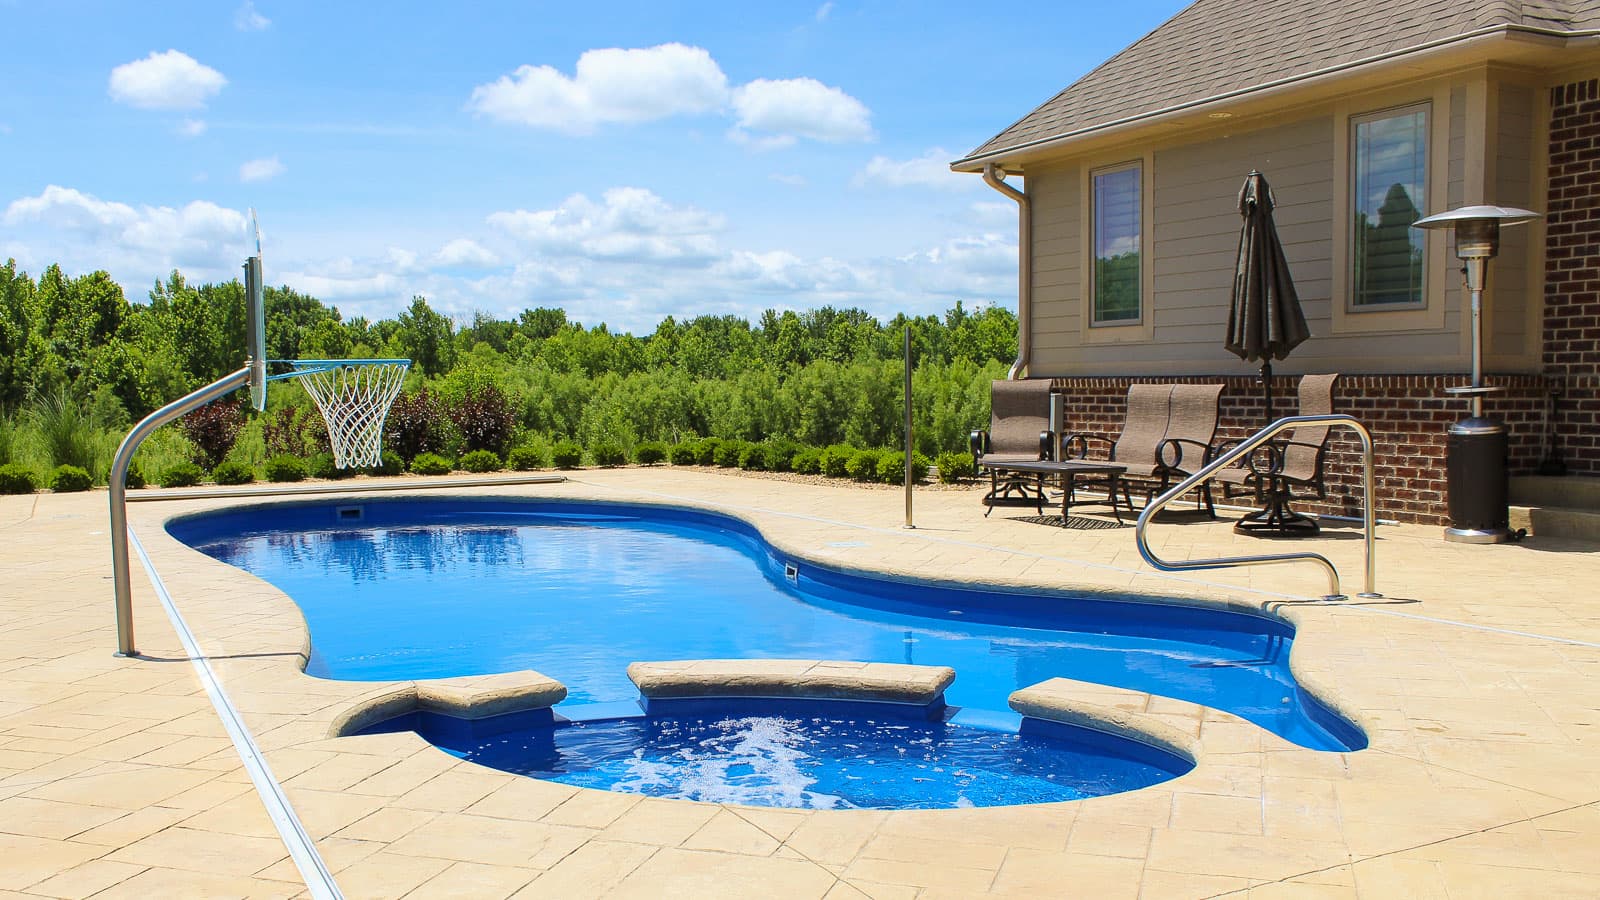 Imagine Pools Brilliant freeform pool model with built-in spa in Ocean Blue color